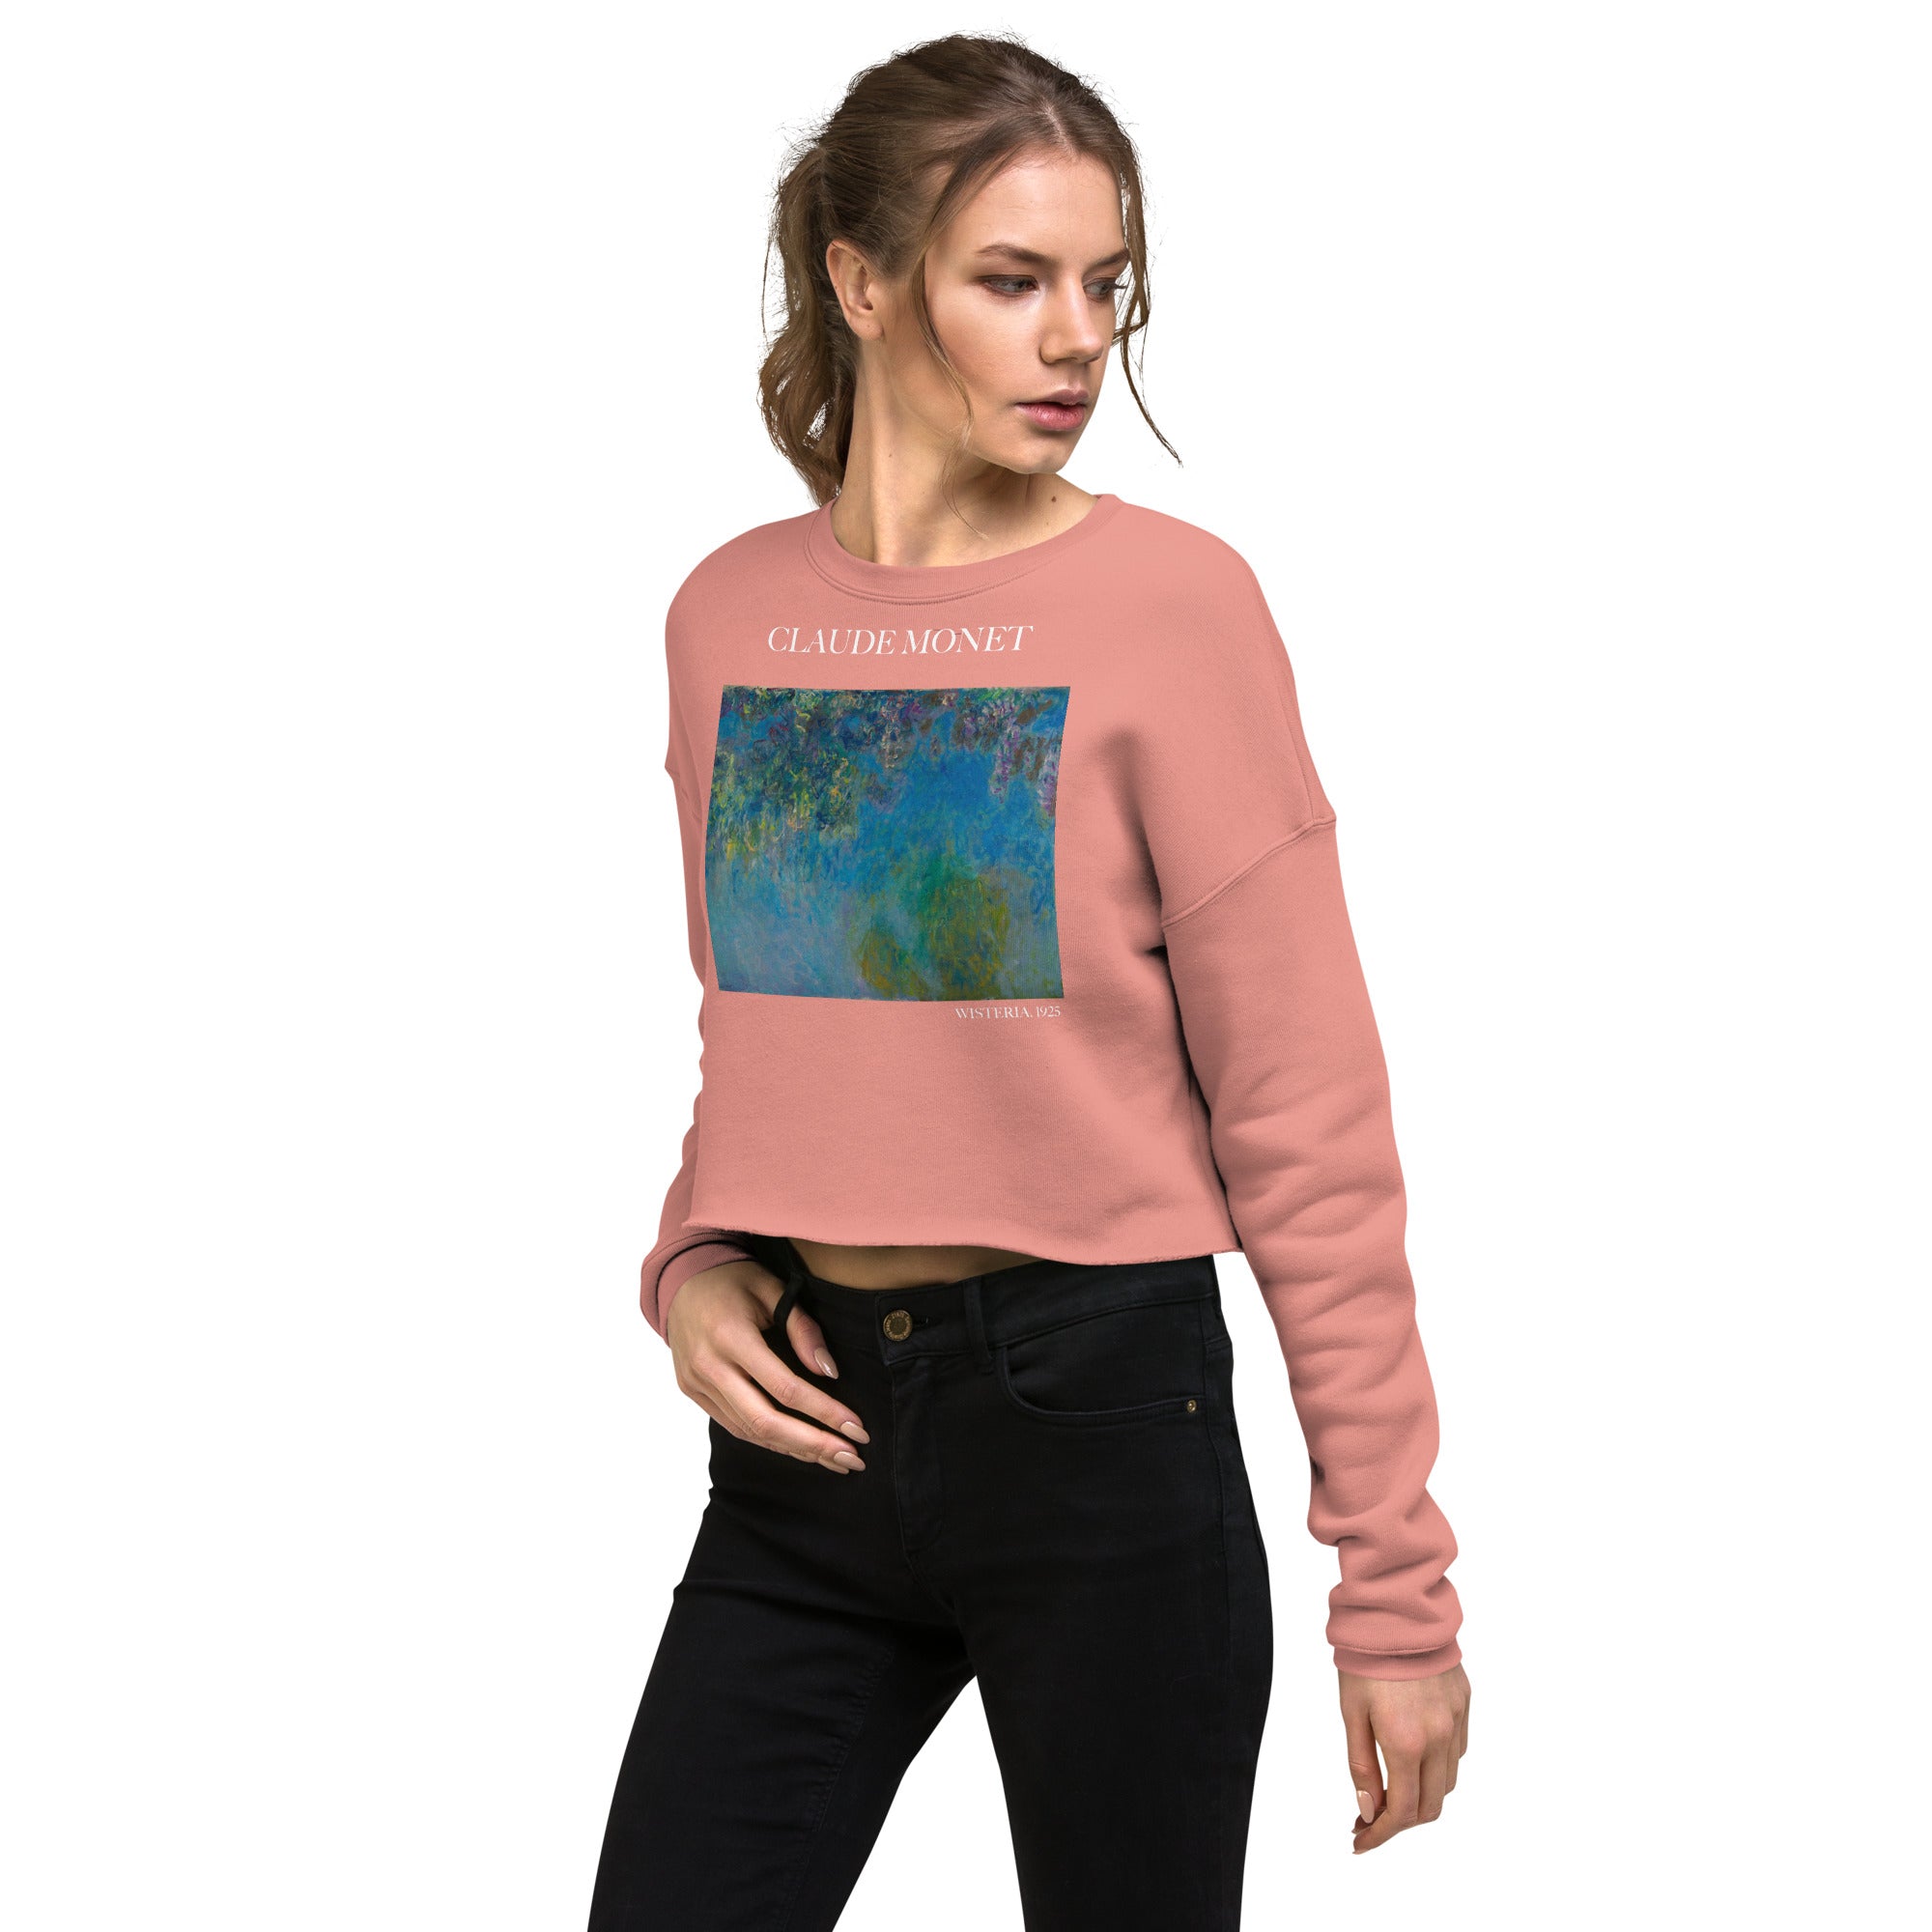 Claude Monet 'Wisteria' Famous Painting Cropped Sweatshirt | Premium Art Cropped Sweatshirt